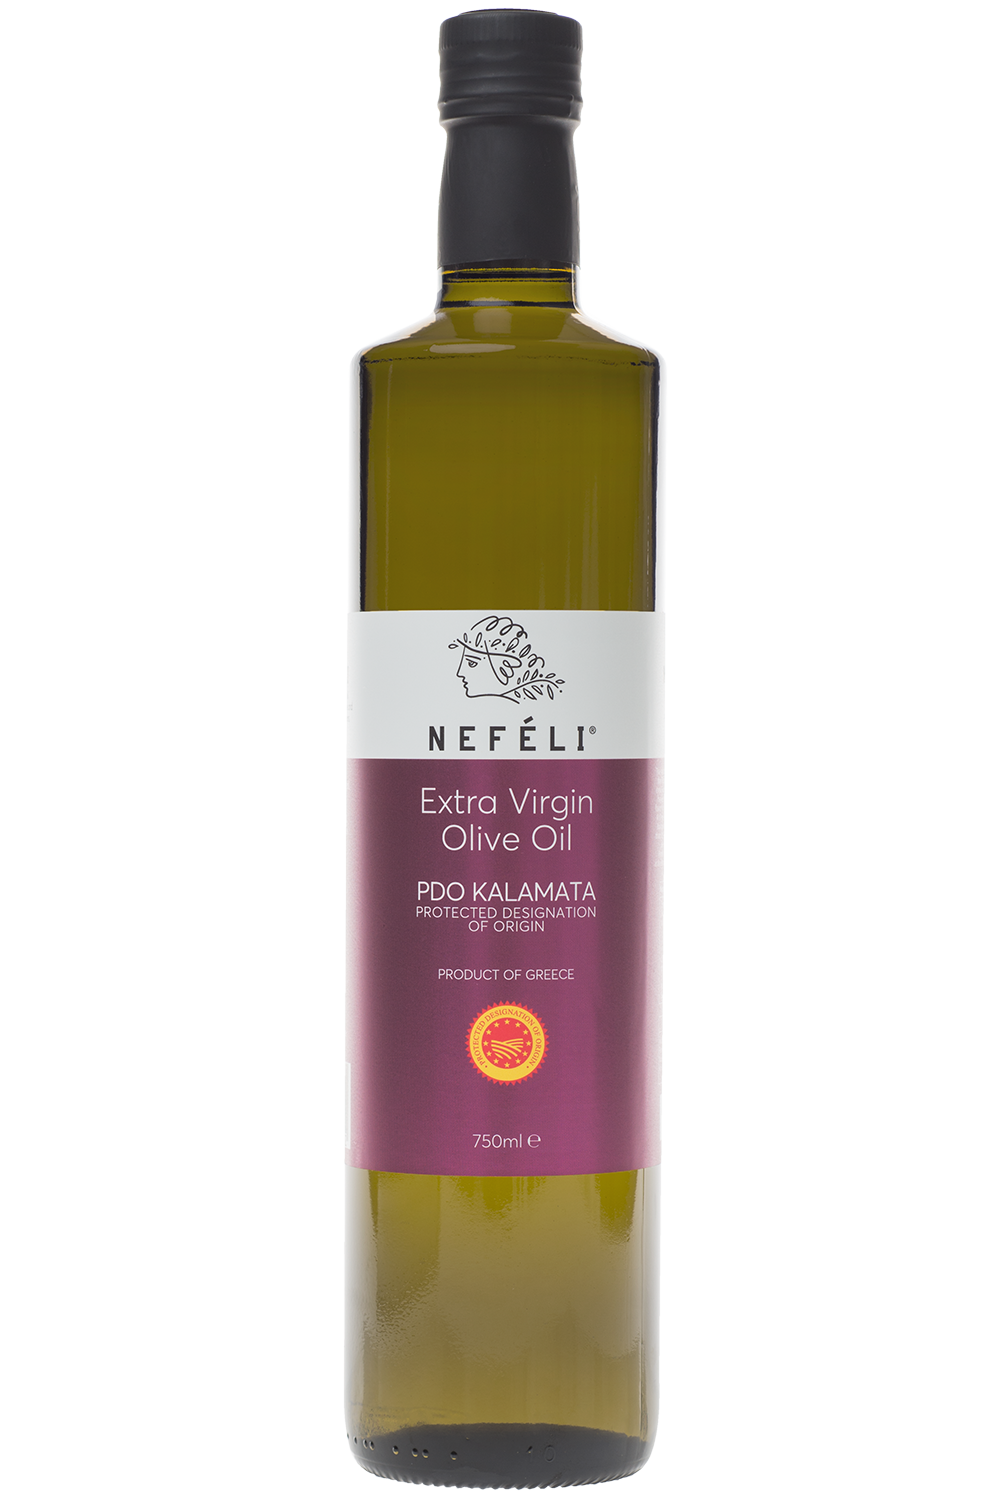 Extra virgin olive oil PDO KALAMATA